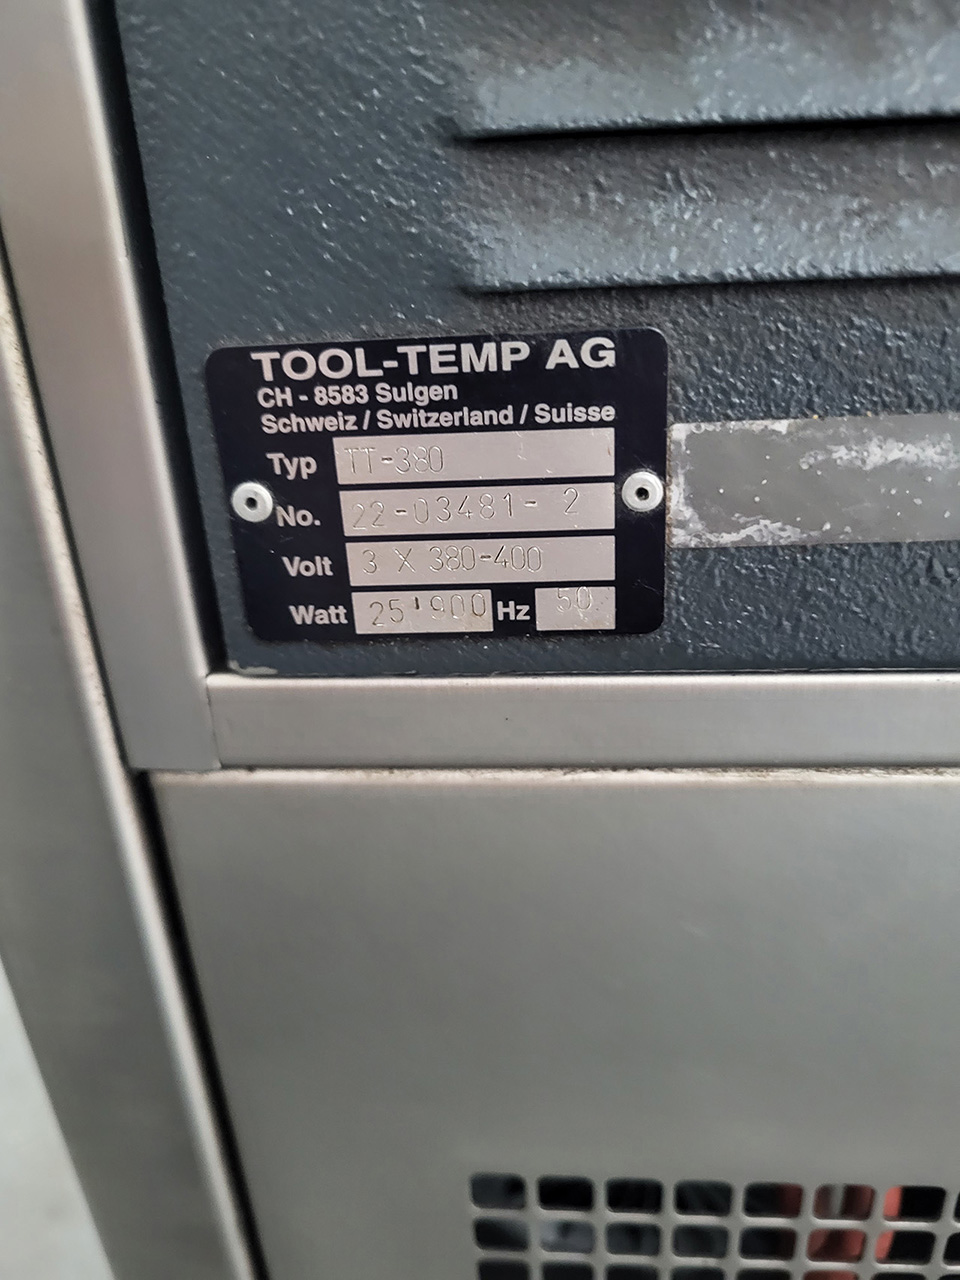 Régulateur de température ToolTemp TT-388 ZU2235, utilisé